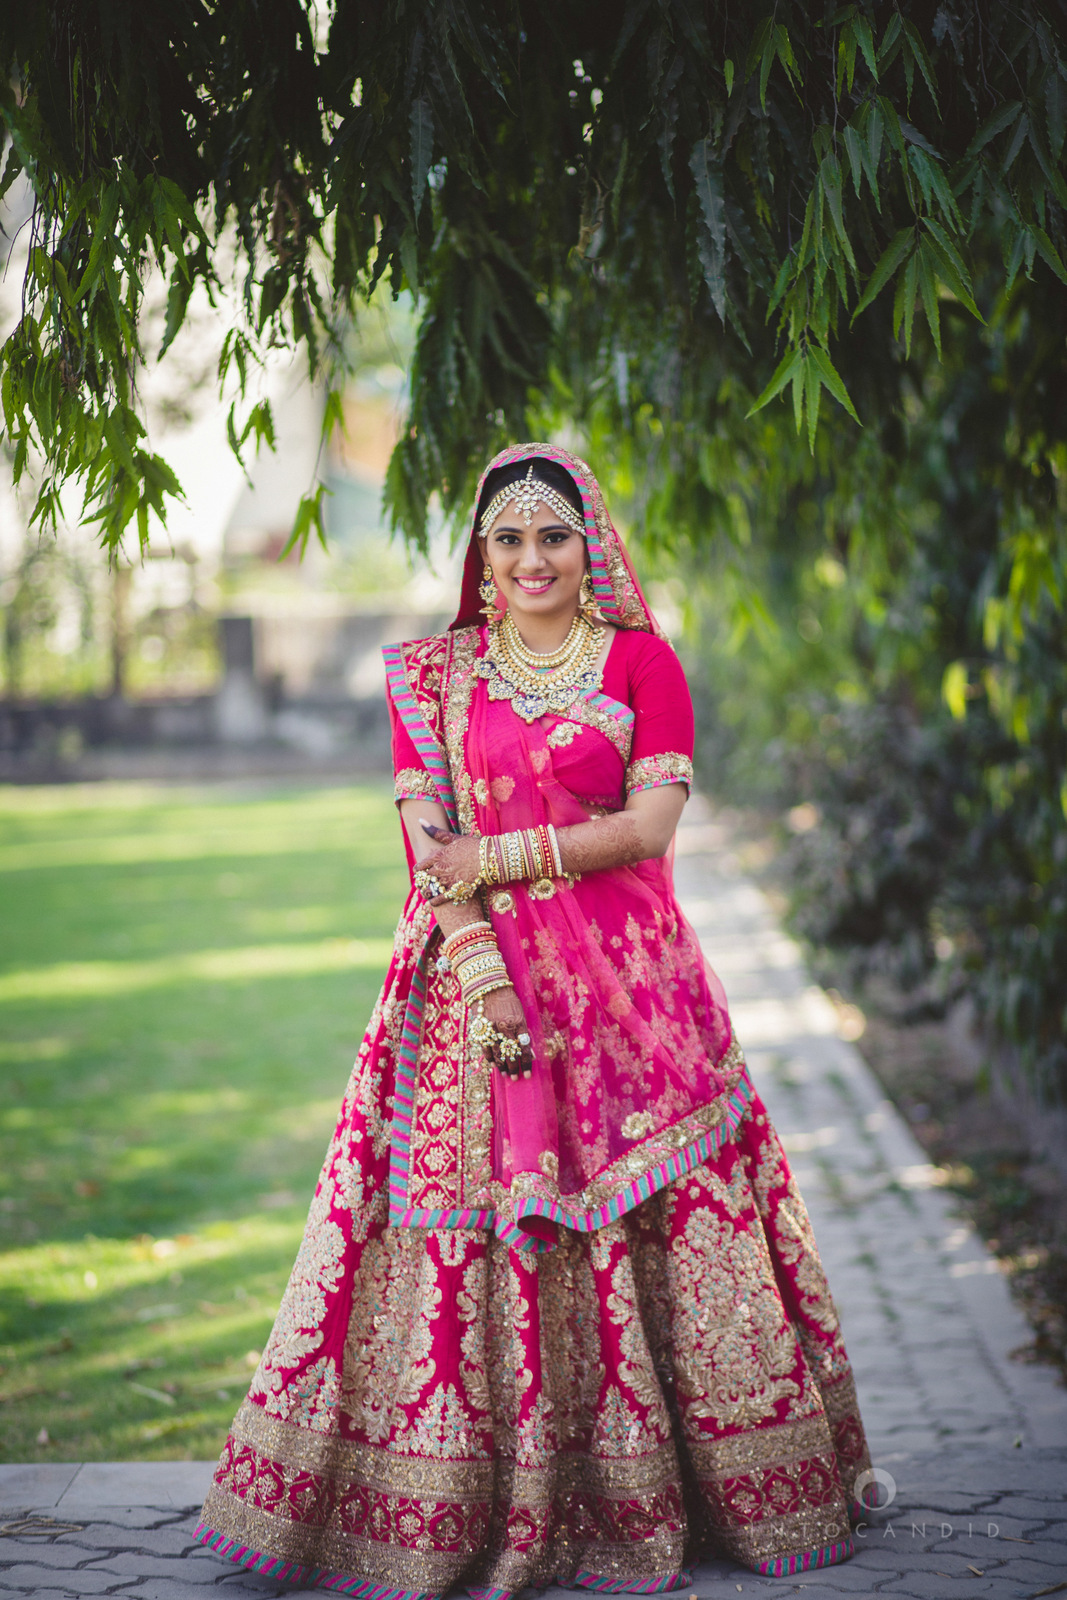 mumbai-gujarati-wedding-photographer-intocandid-photography-tg-017.jpg